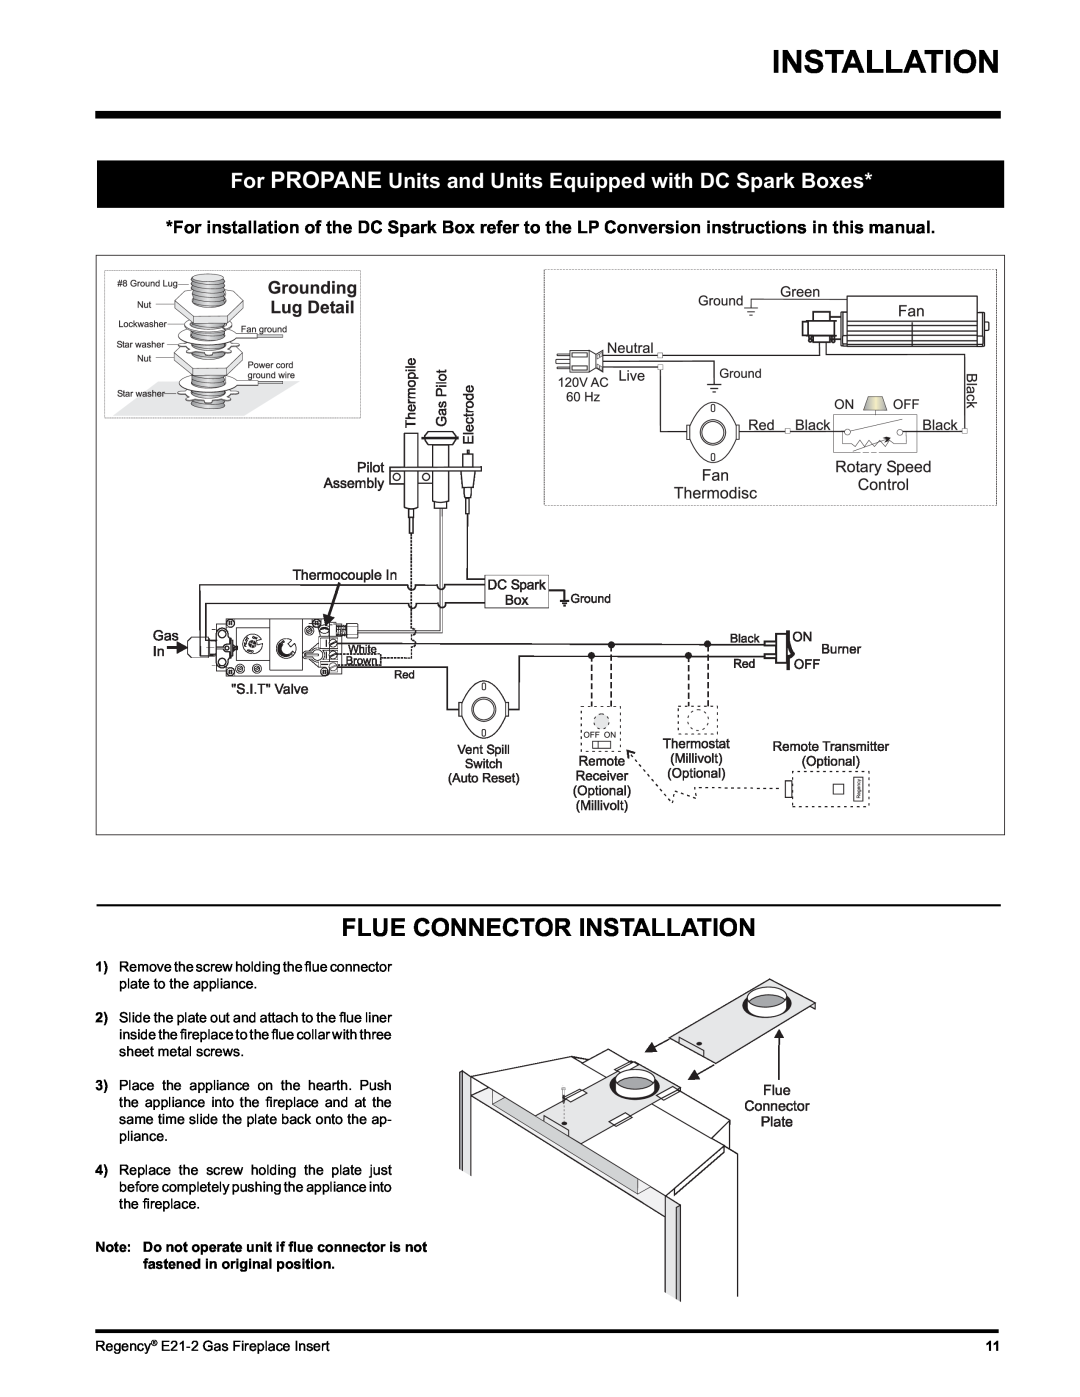 Regency E21-NG2, E21-LP2 installation manual Flue Connector Installation 